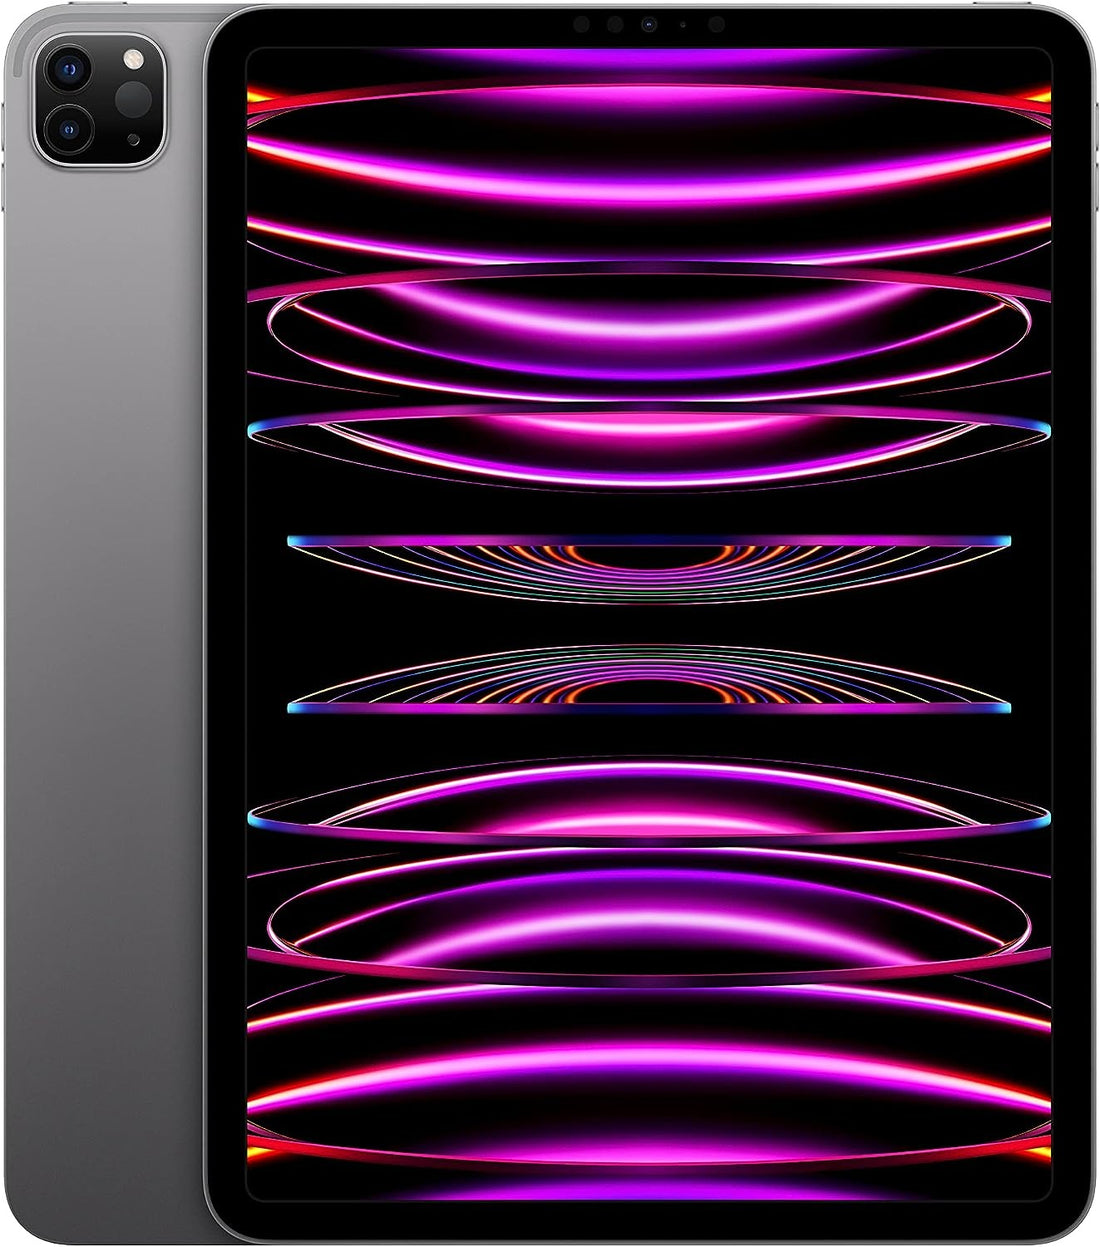 Apple iPad Pro 11-inch 2nd Gen (2020) 512GB, WIFI + Cellular - Space Gray (Certified Refurbished)